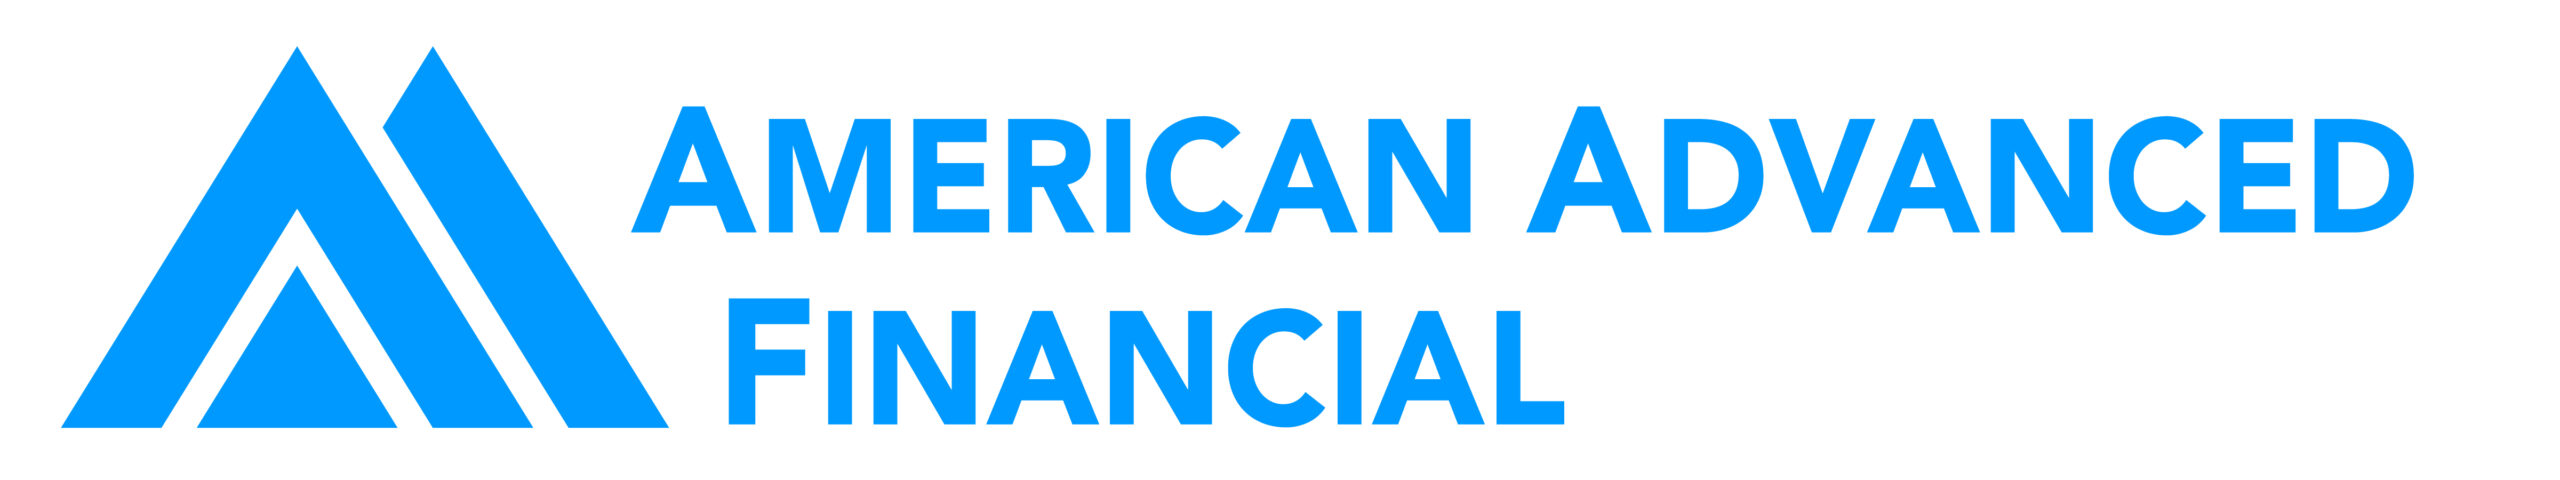 American Advanced Financial